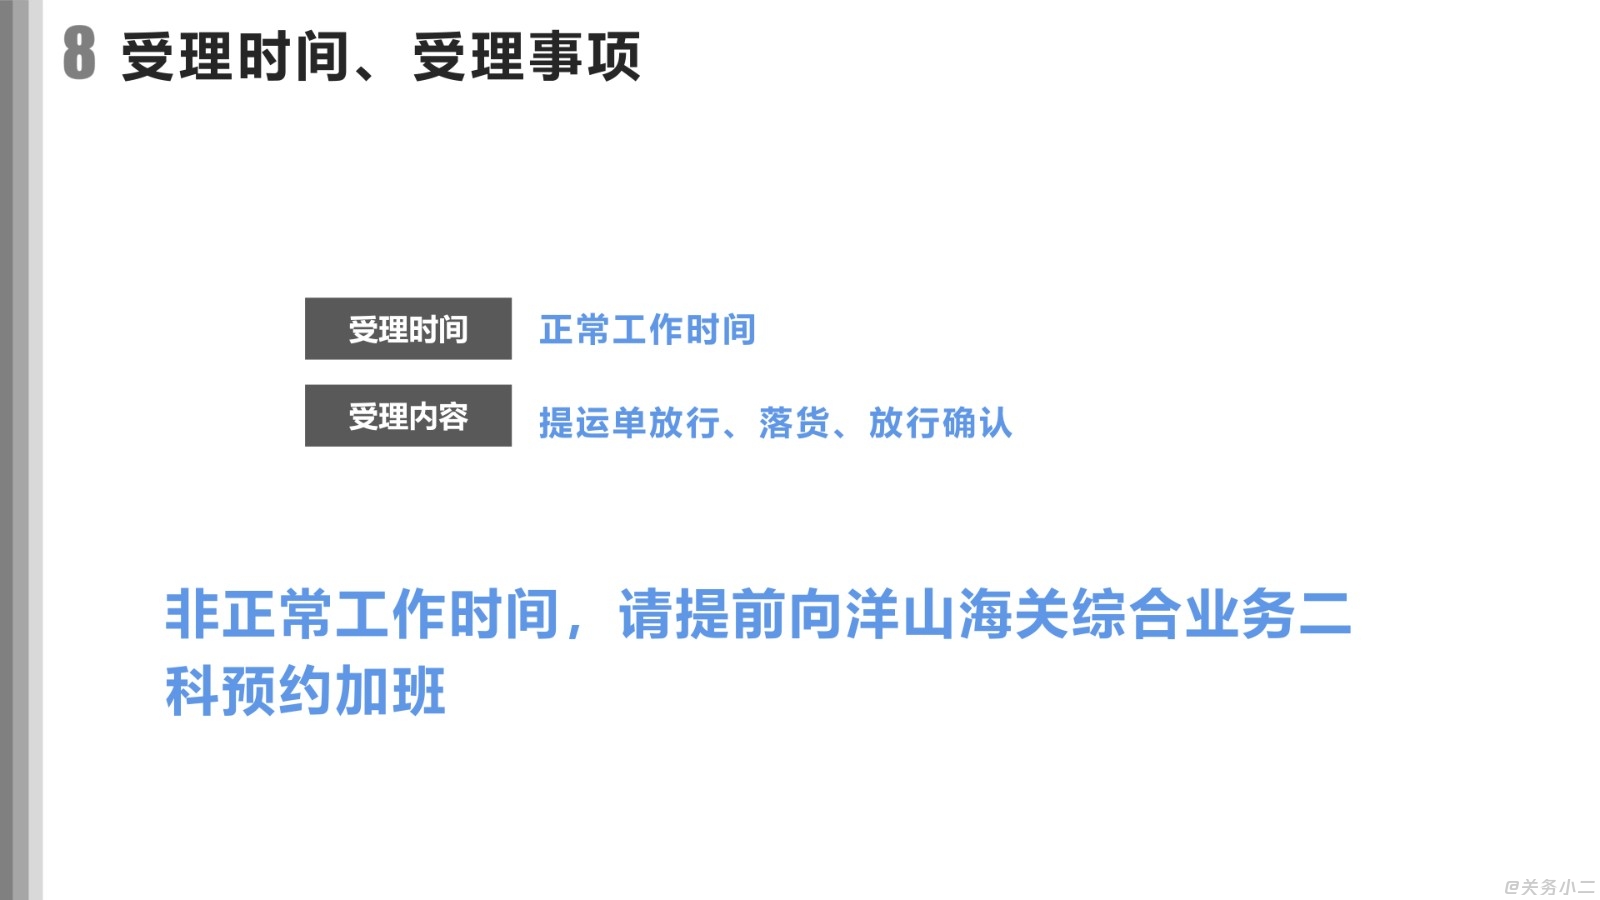 PPT-上海海关海运出口放行信息切换安排宣贯会_13.jpg